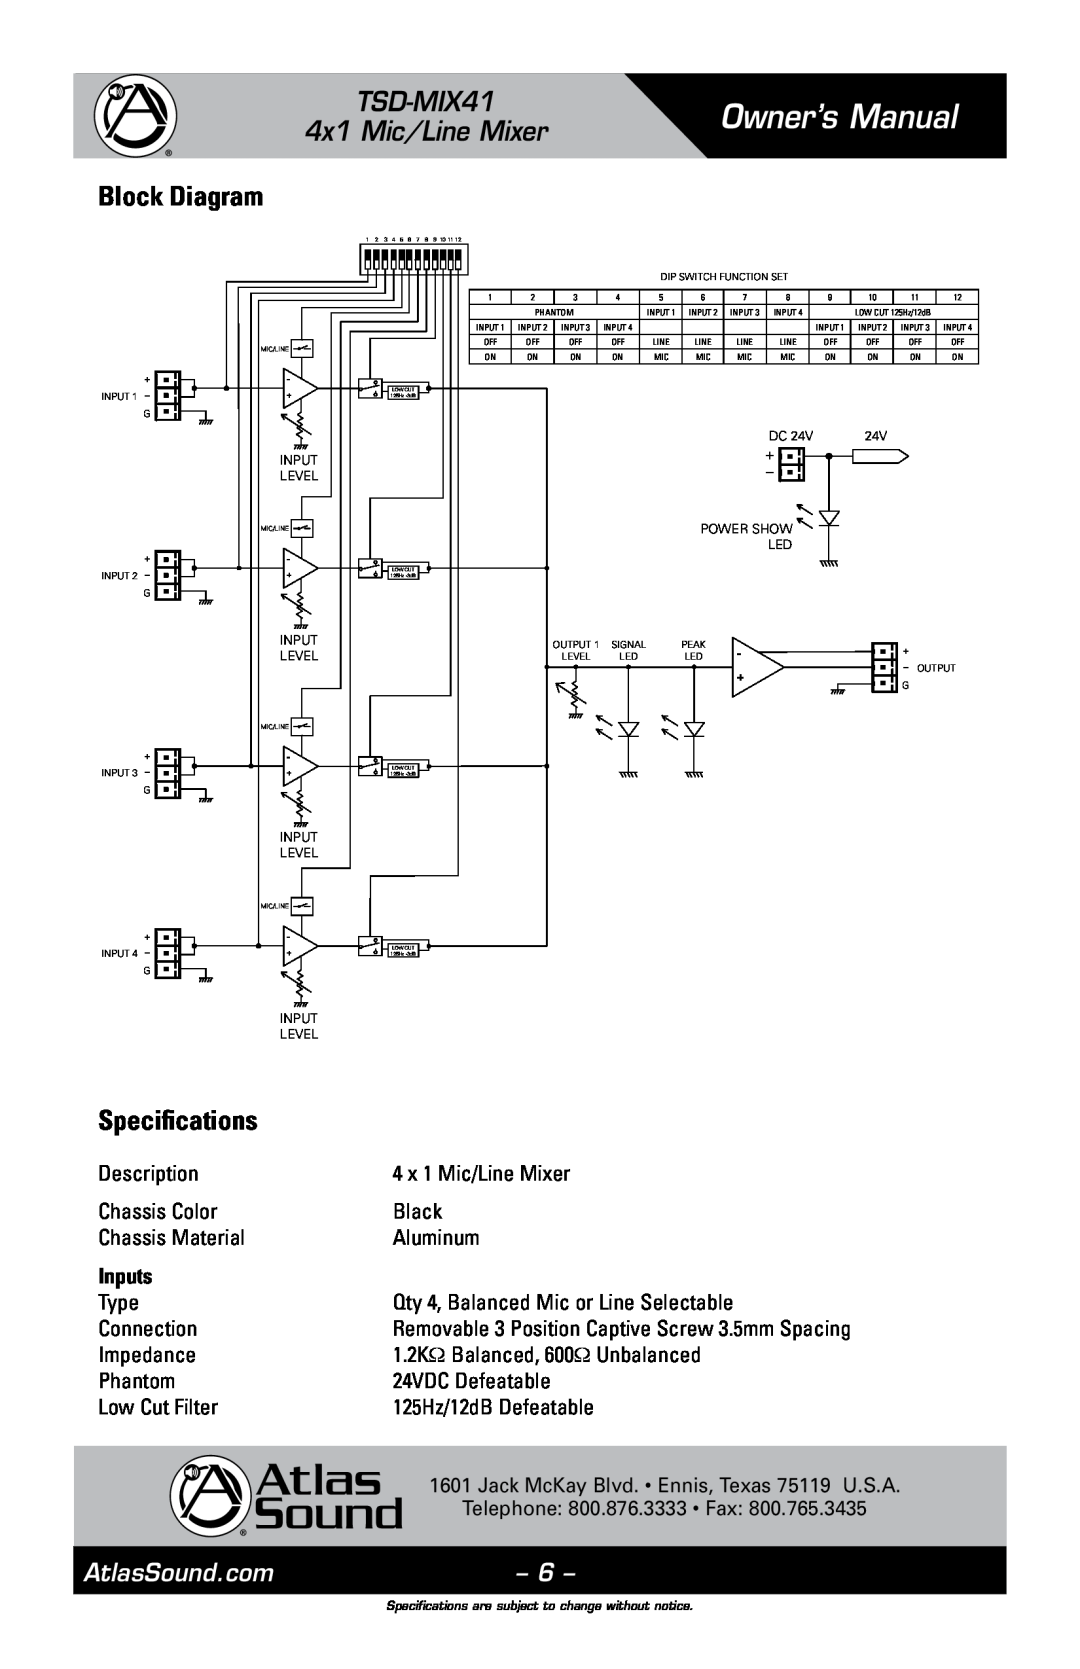 Atlas Sound Block Diagram, Specifications, Inputs, Owner’s Manual, TSD-MIX41 4x1 Mic/Line Mixer, AtlasSound.com 